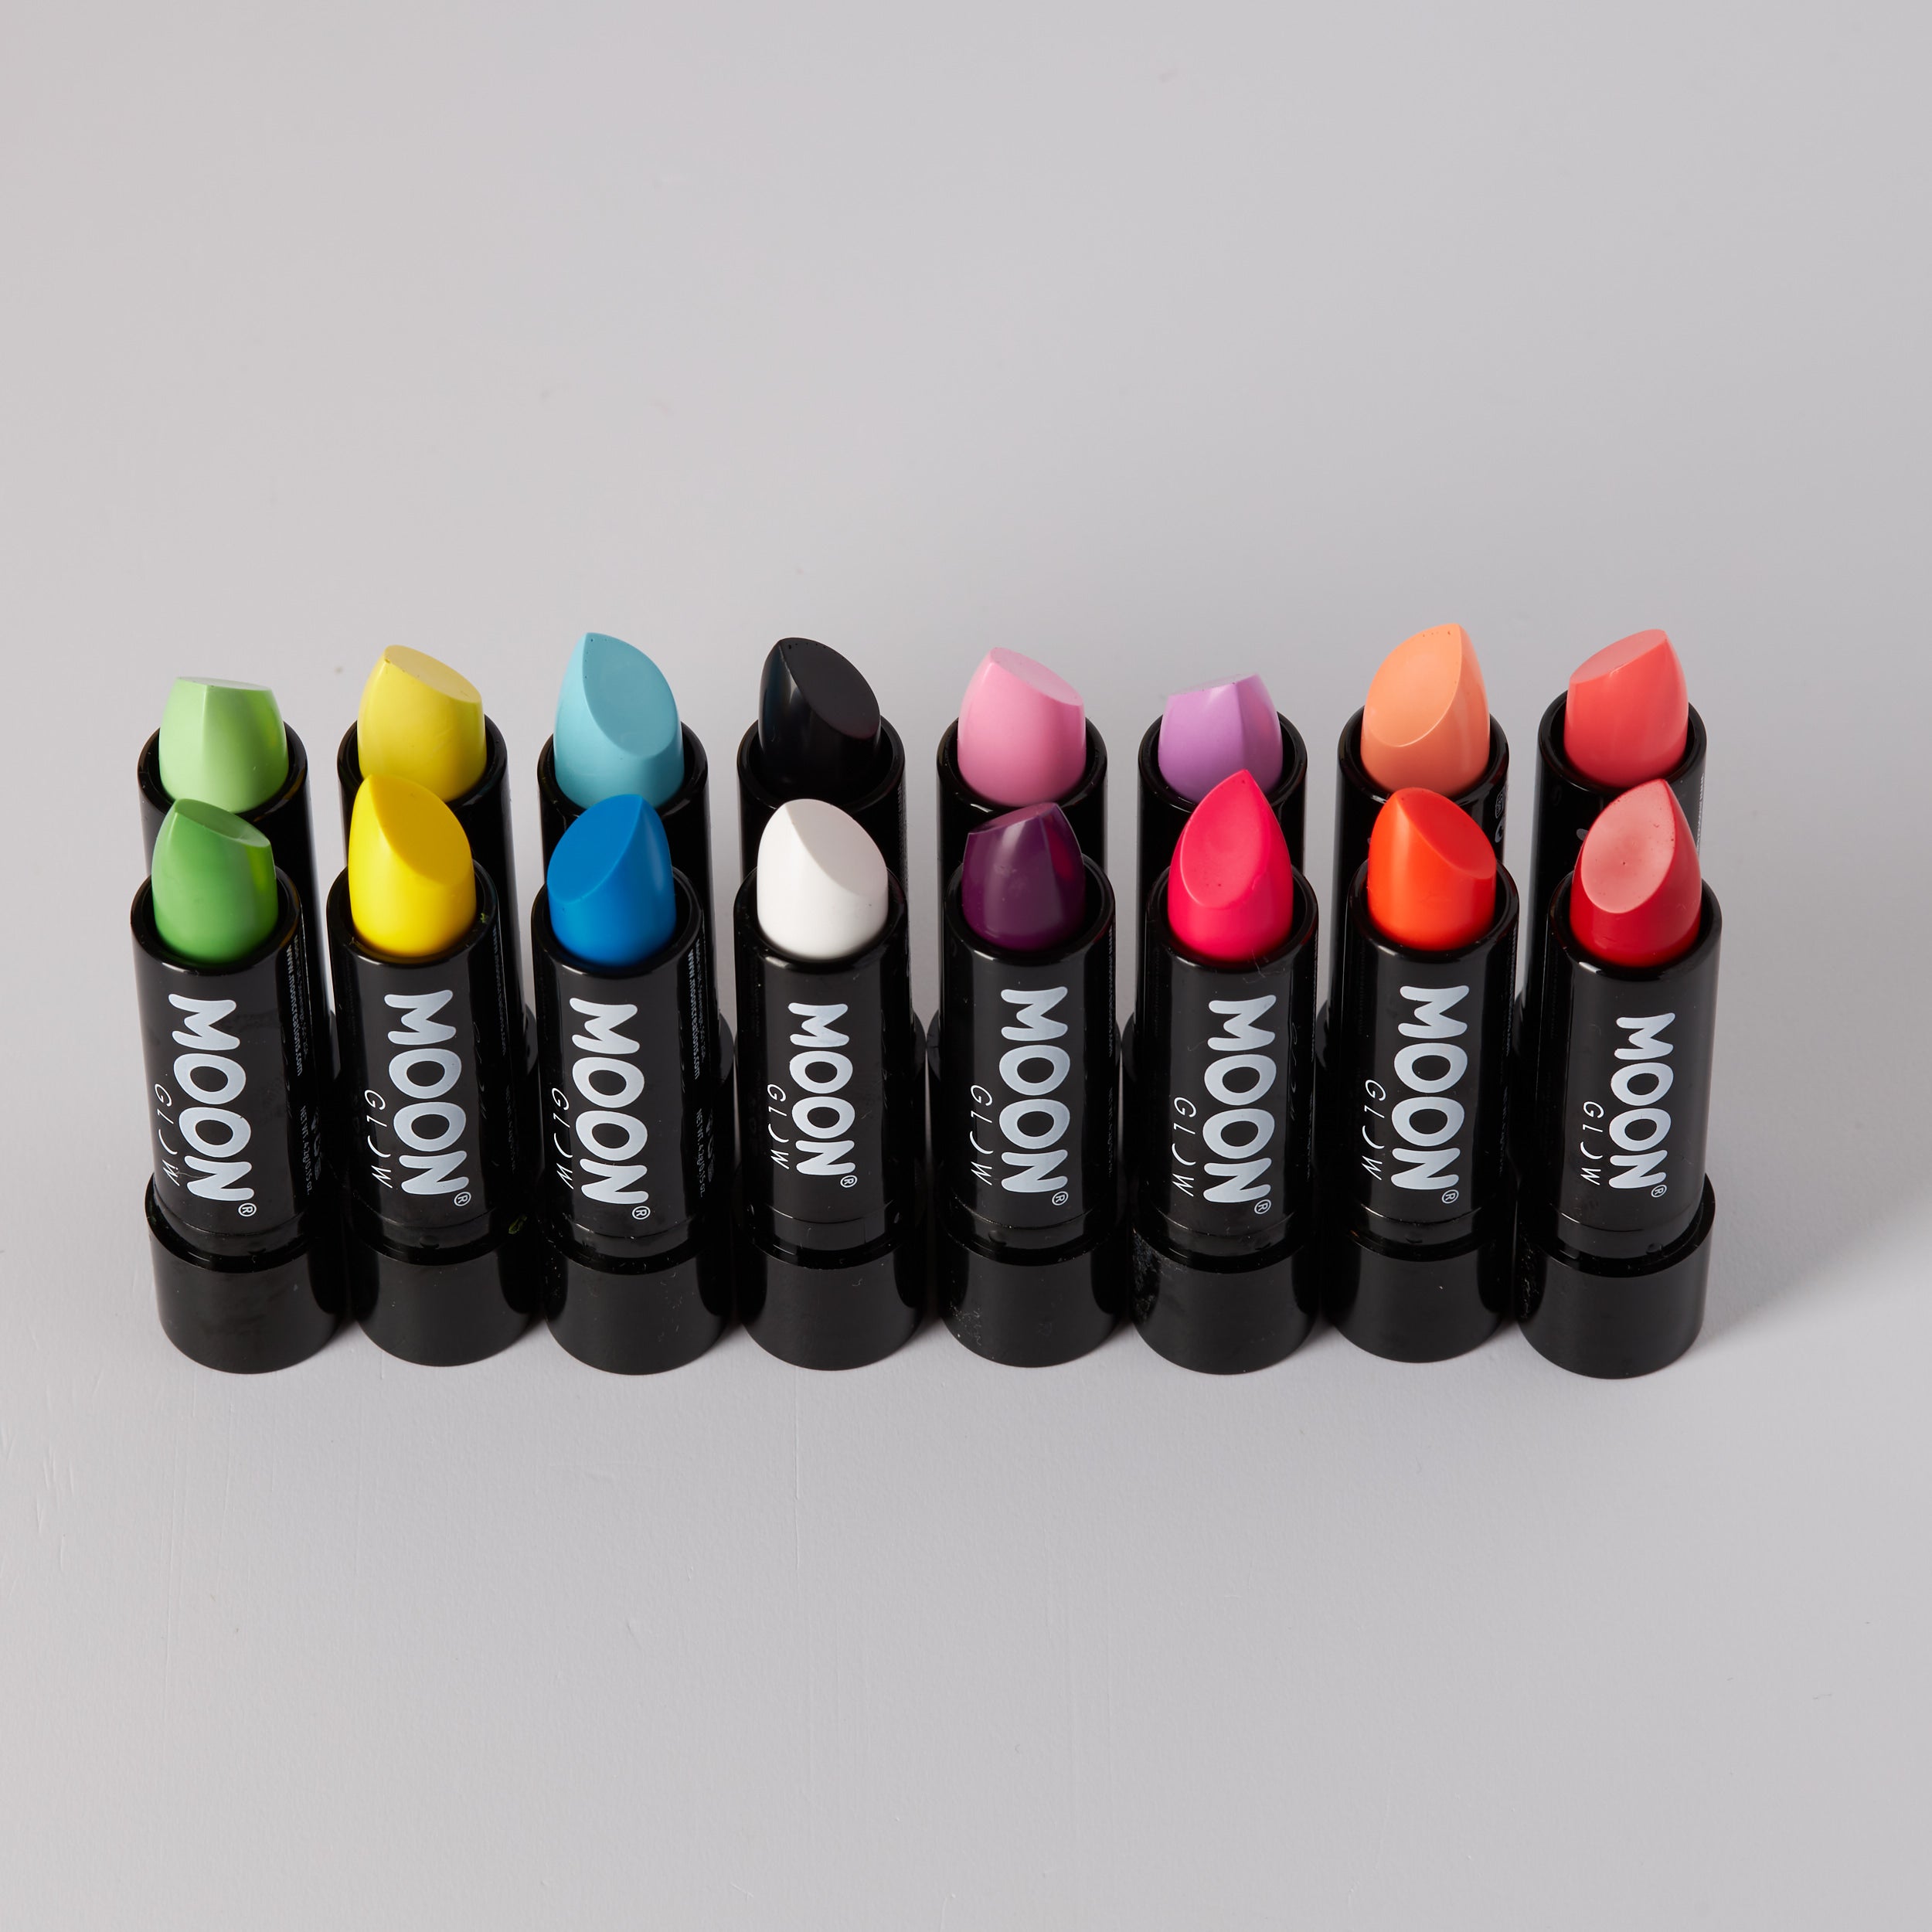 Pastel Neon UV Glow Blacklight Lipstick. Cosmetically certified, FDA & Health Canada compliant and cruelty free.